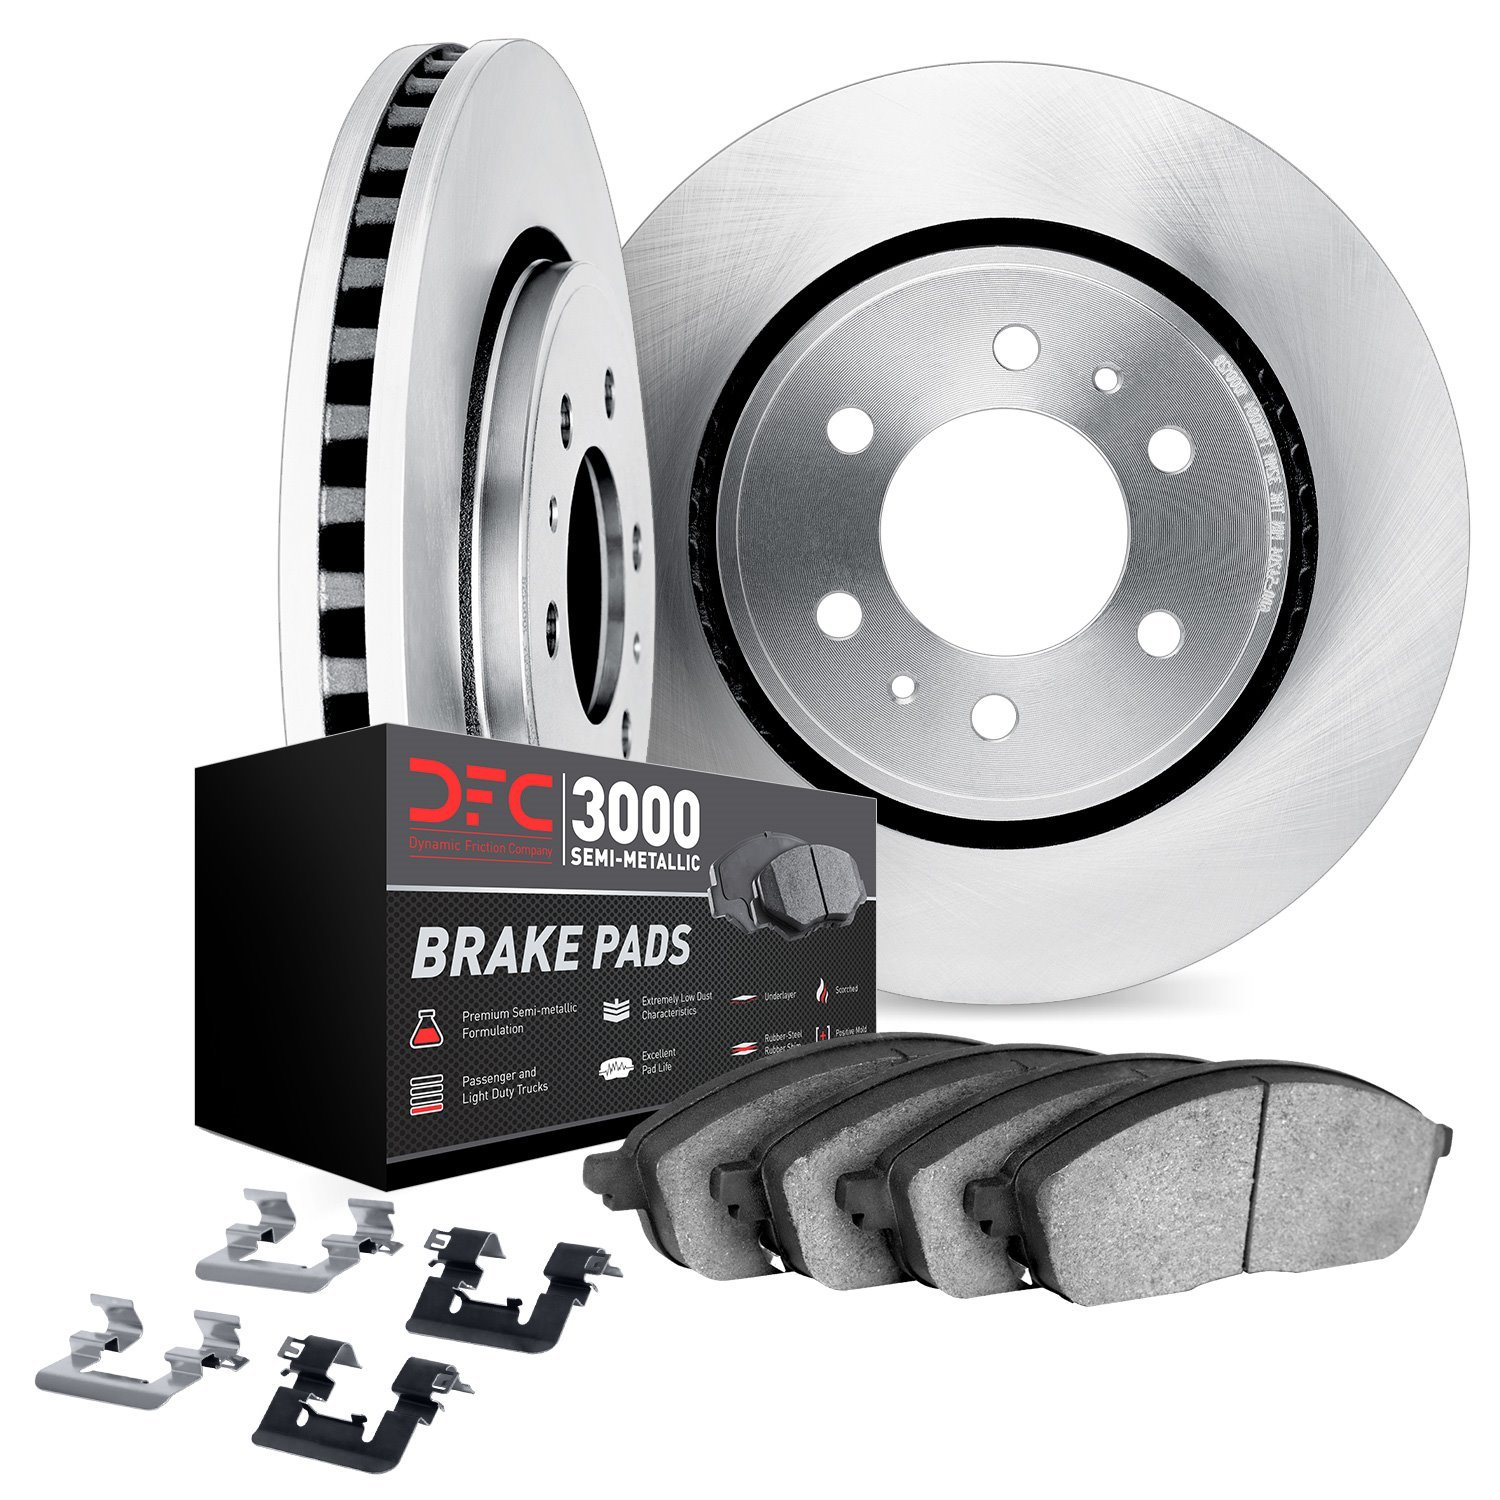 5112-76148 Slotted Brake Rotors with 3000-Series Semi-Metallic Brake Pads Kit & Hardware [Silver], Fits Select Lexus/Toyota/Scio